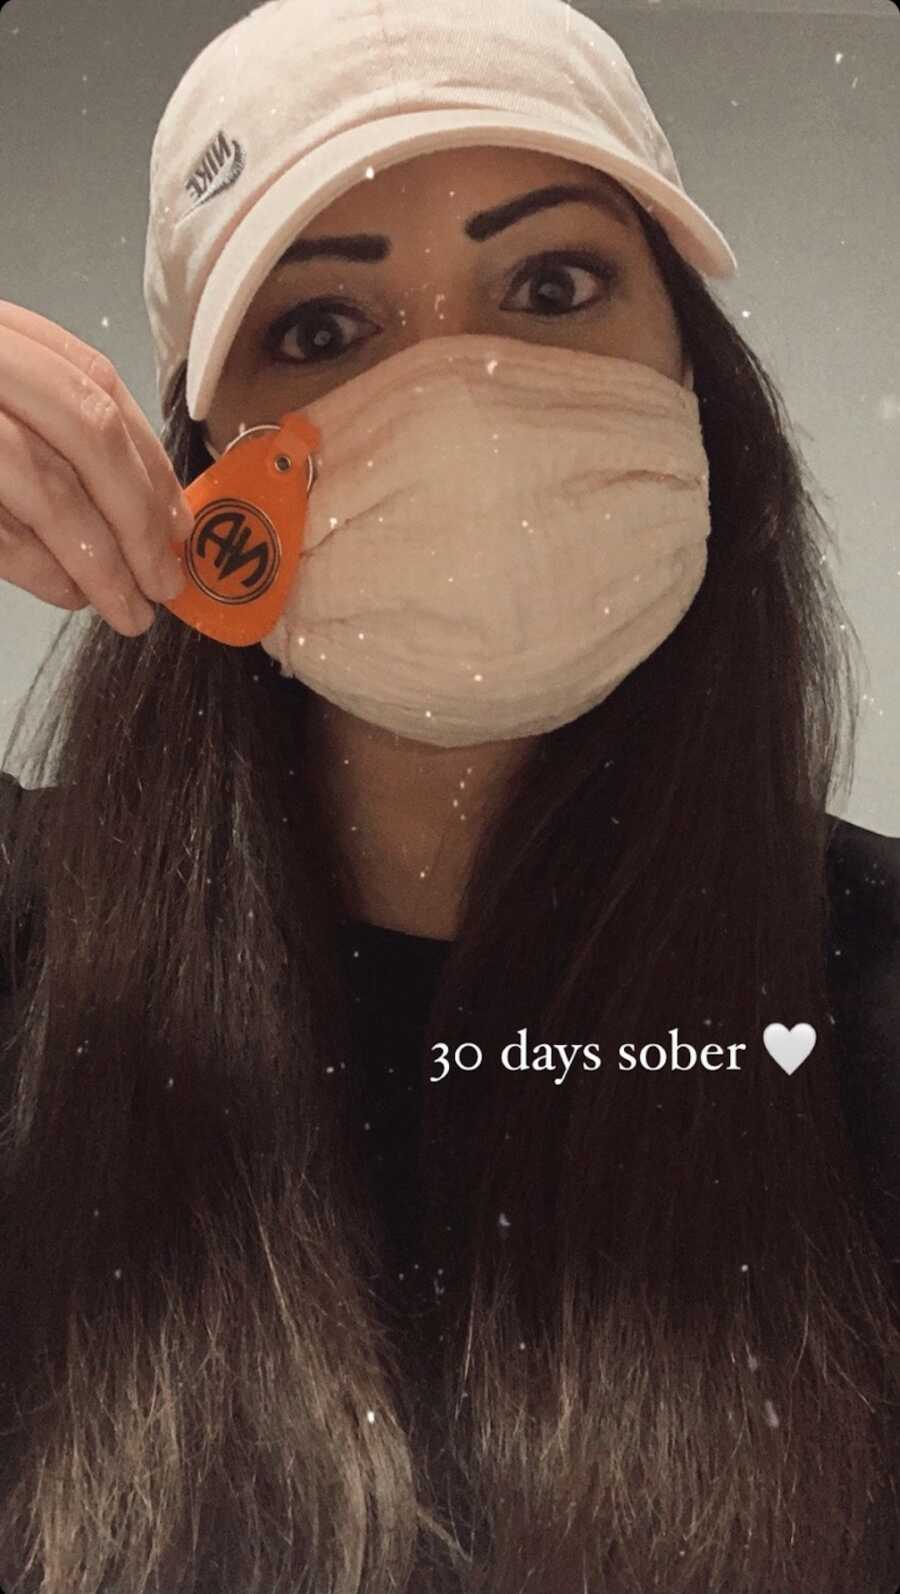 woman 30 days sober wearing a mask